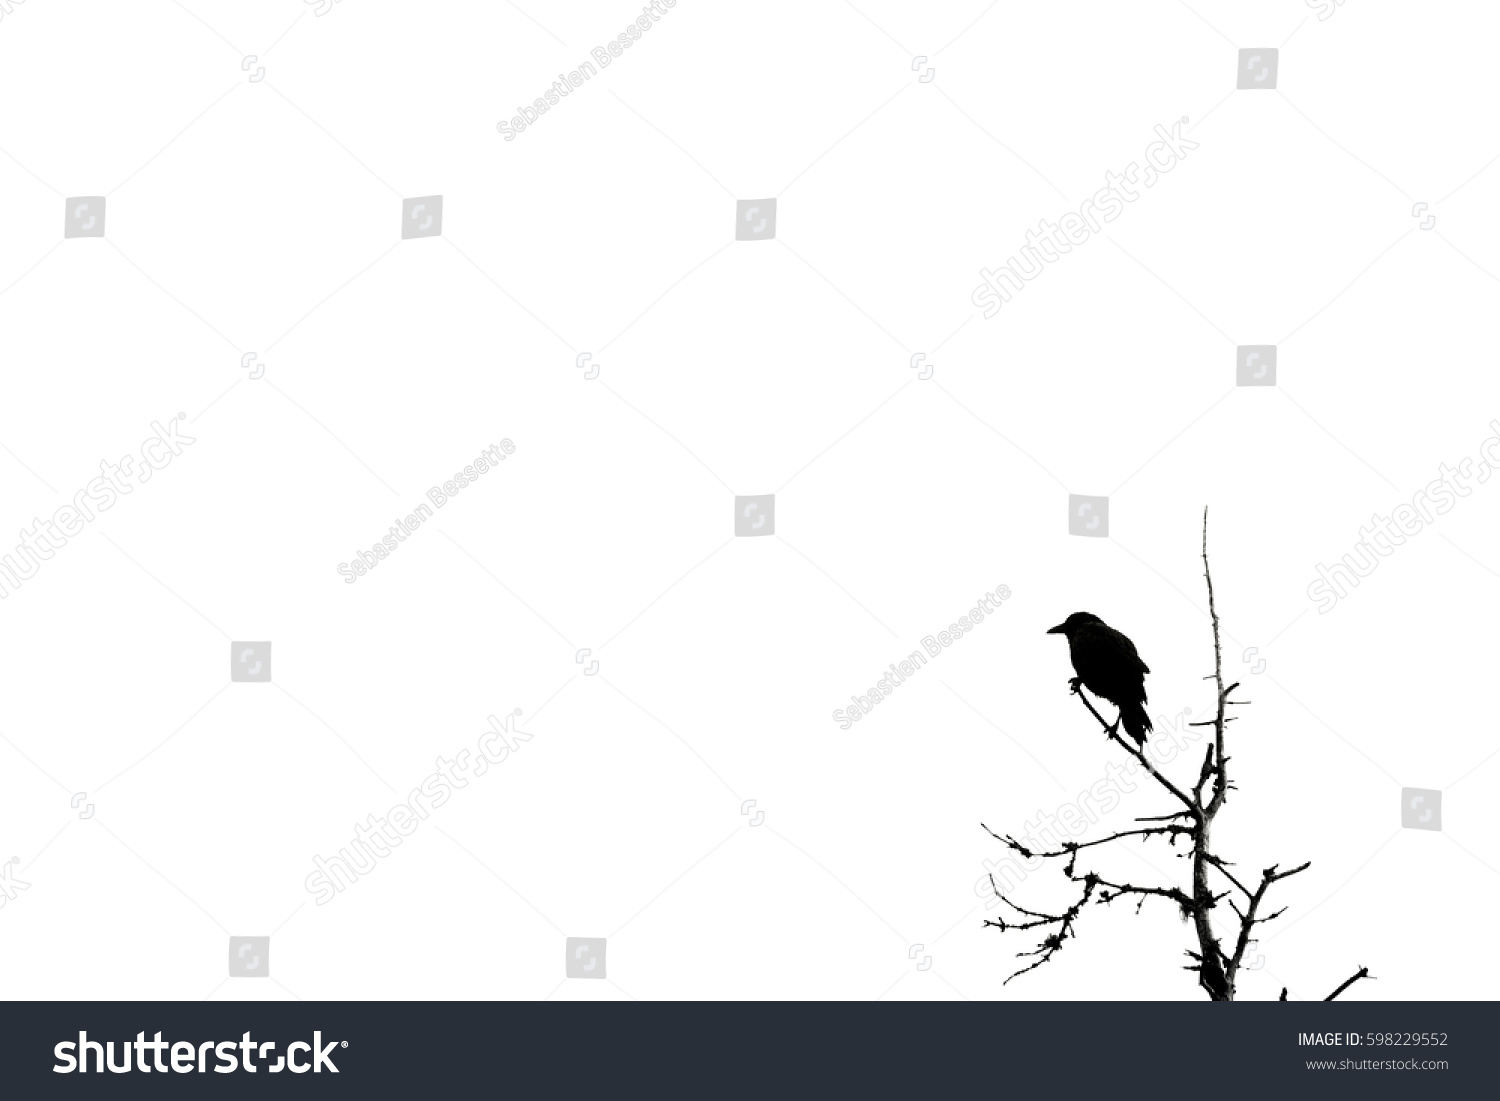 Minimalist bird sparrow silhouette at top of tree #598229552